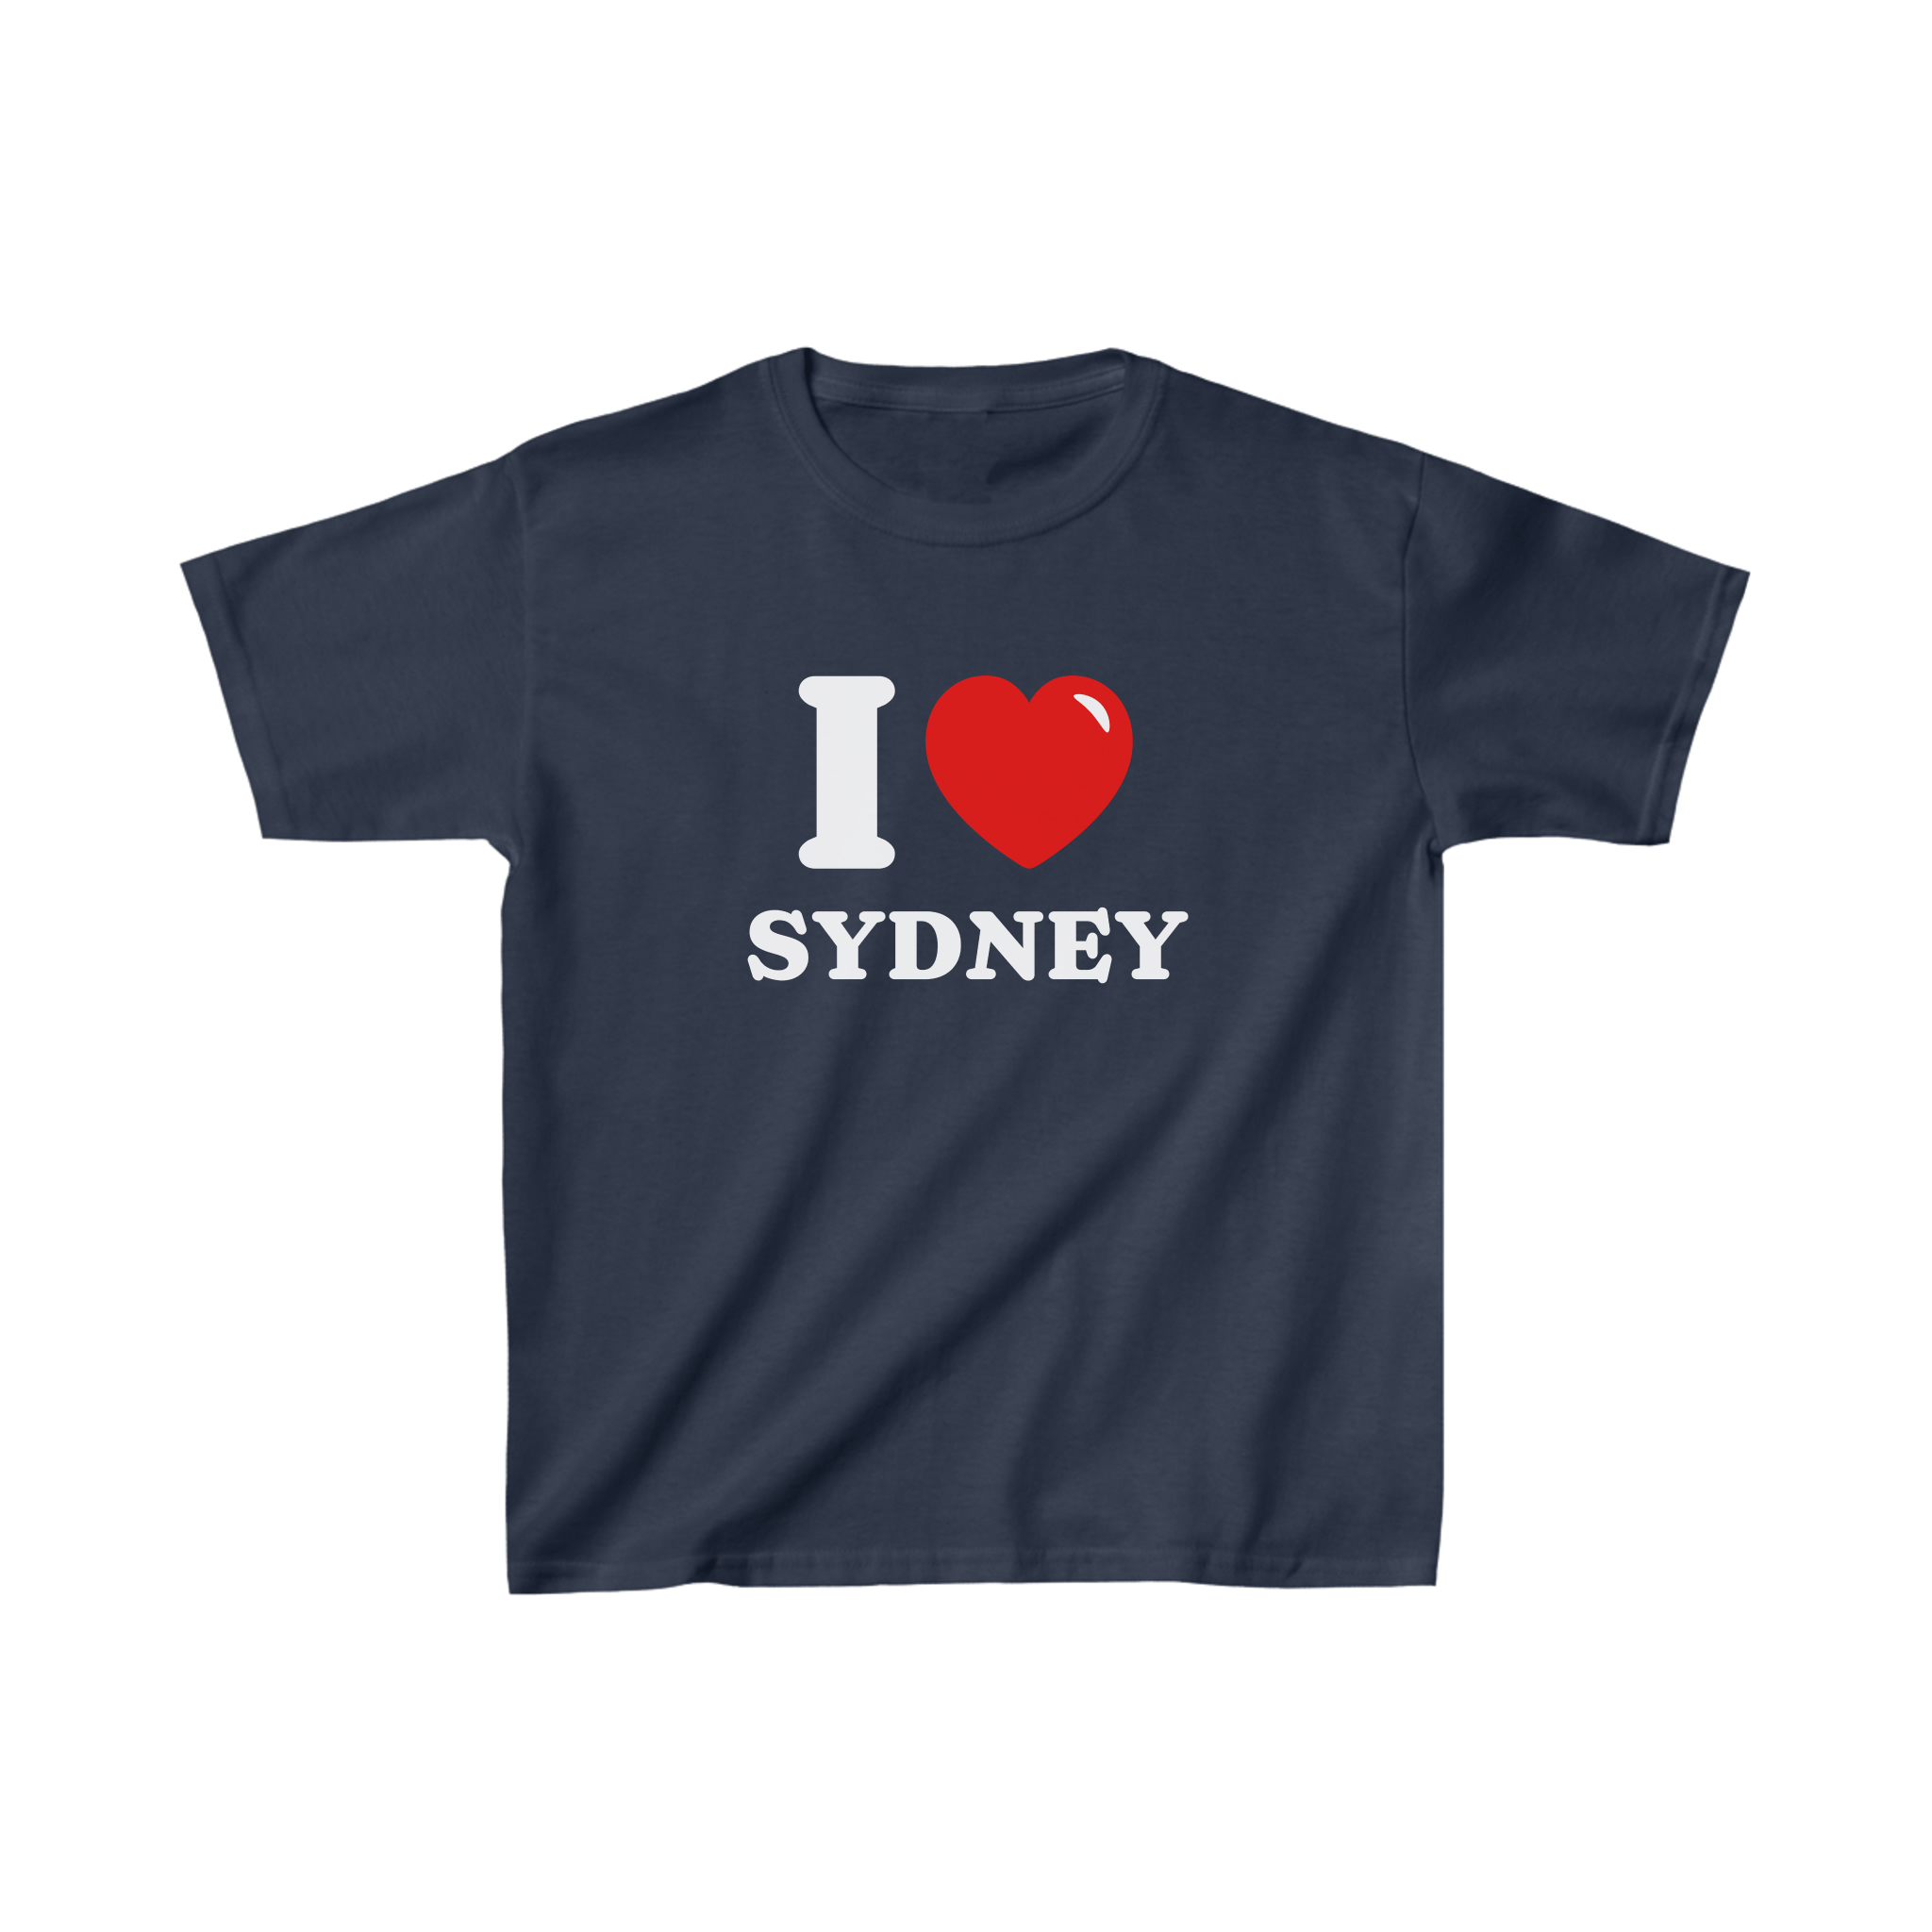 'I love Sydney' baby tee - In Print We Trust